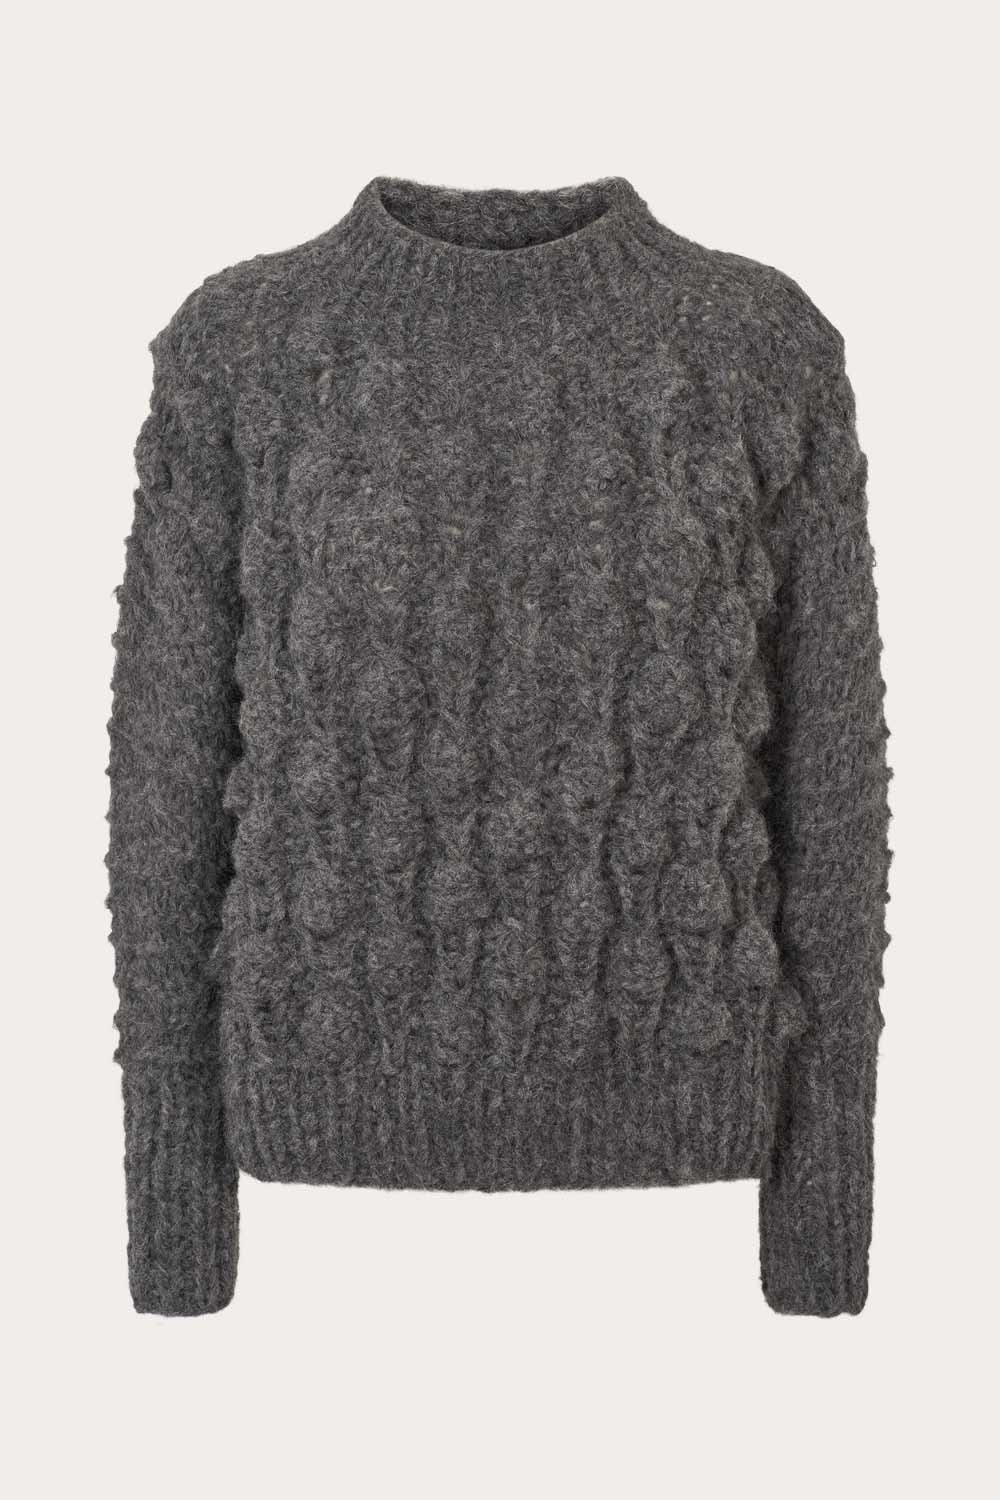 O'TAY Damaris Sweater Blouses Charcoal